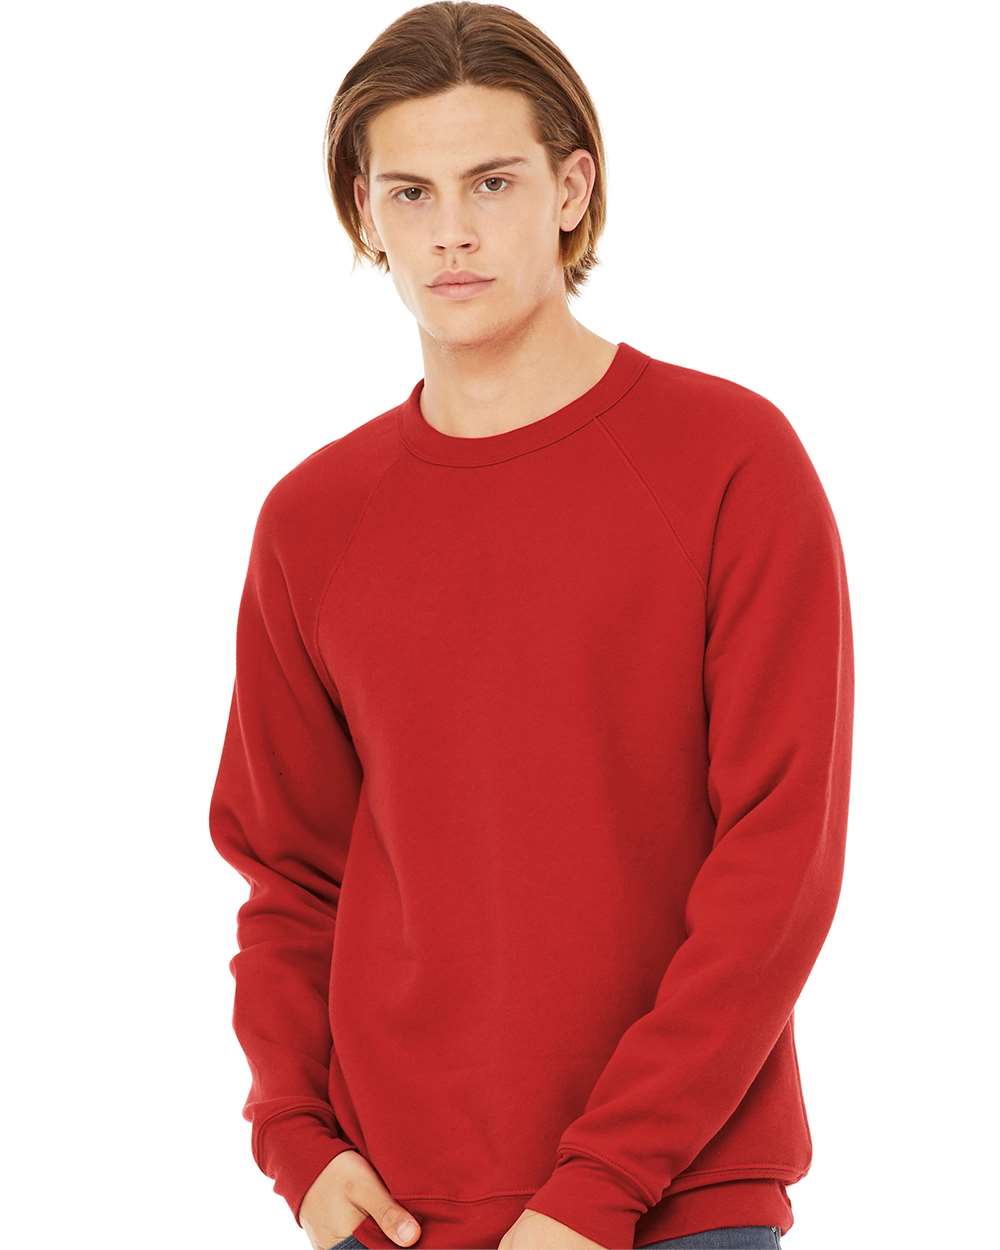 Bella + Canvas Fleece Crewneck Sweatshirt Size Medium - Large